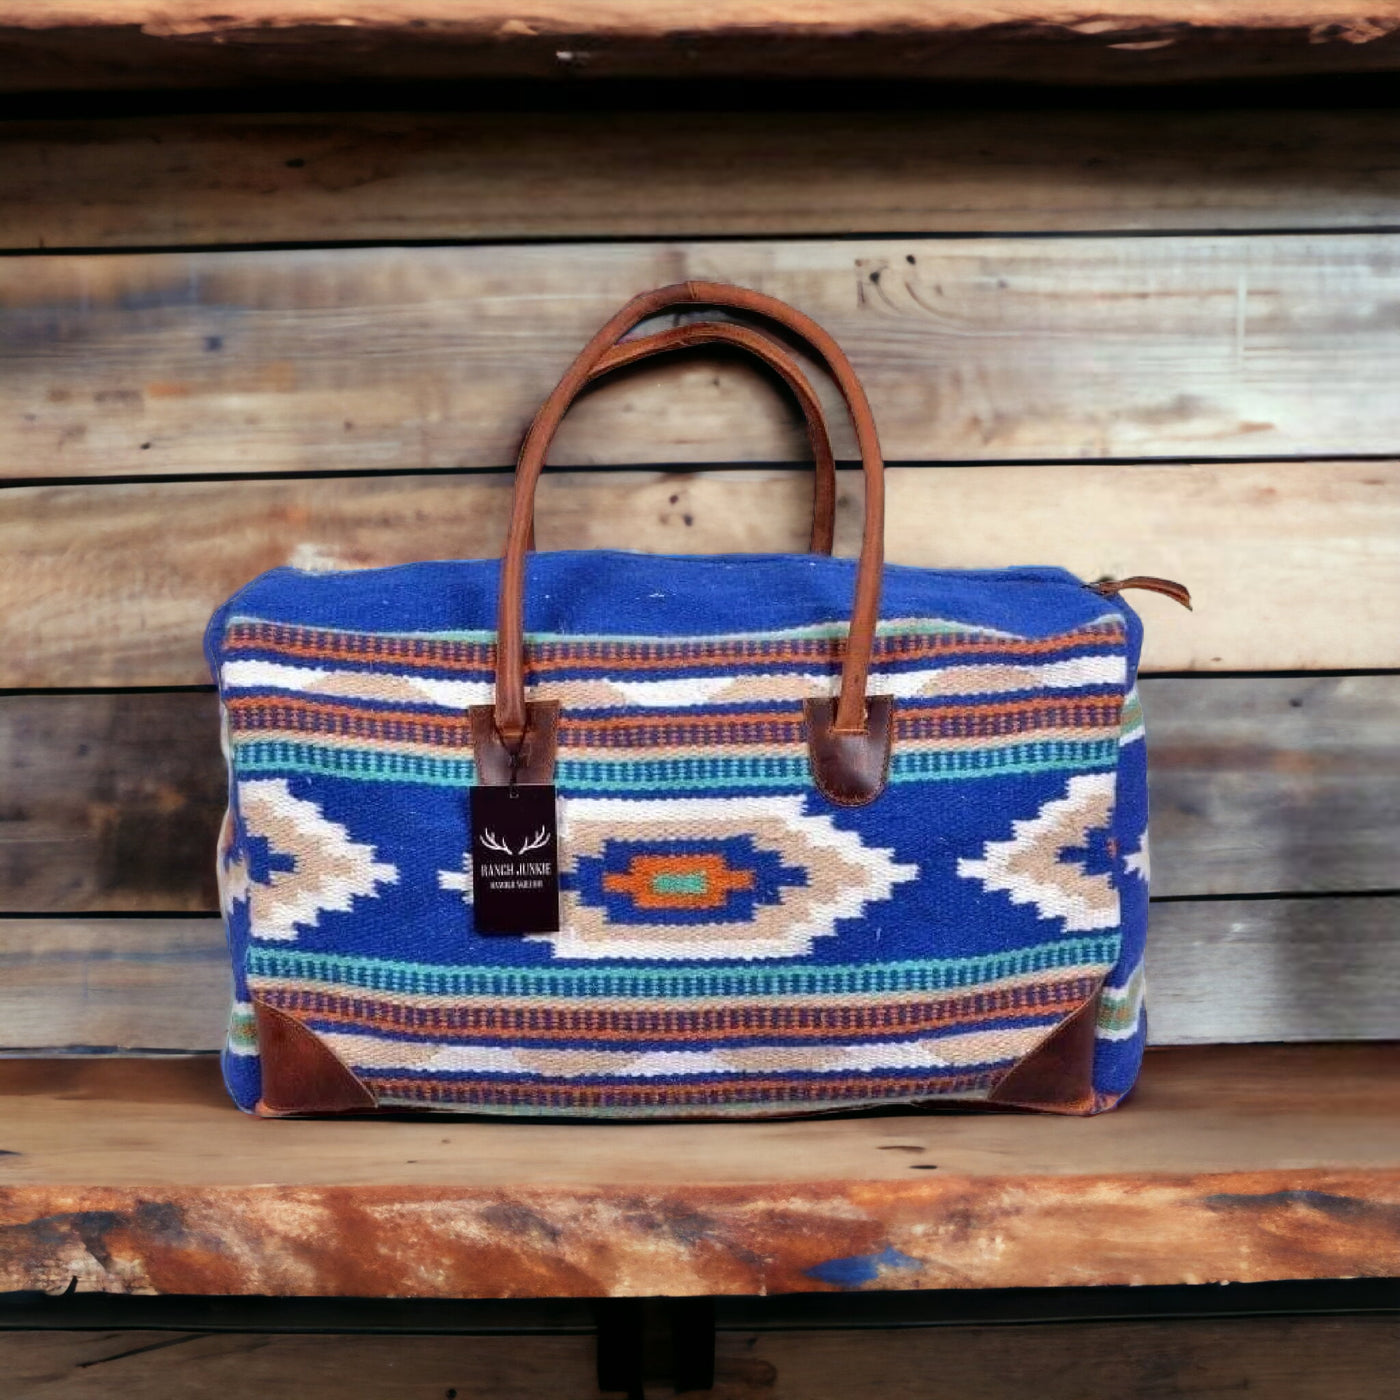 Boho Aztec Large Weekender Southwestern Duffel Bag Dakota Saddle Blanket Bag 100% Leather Handles